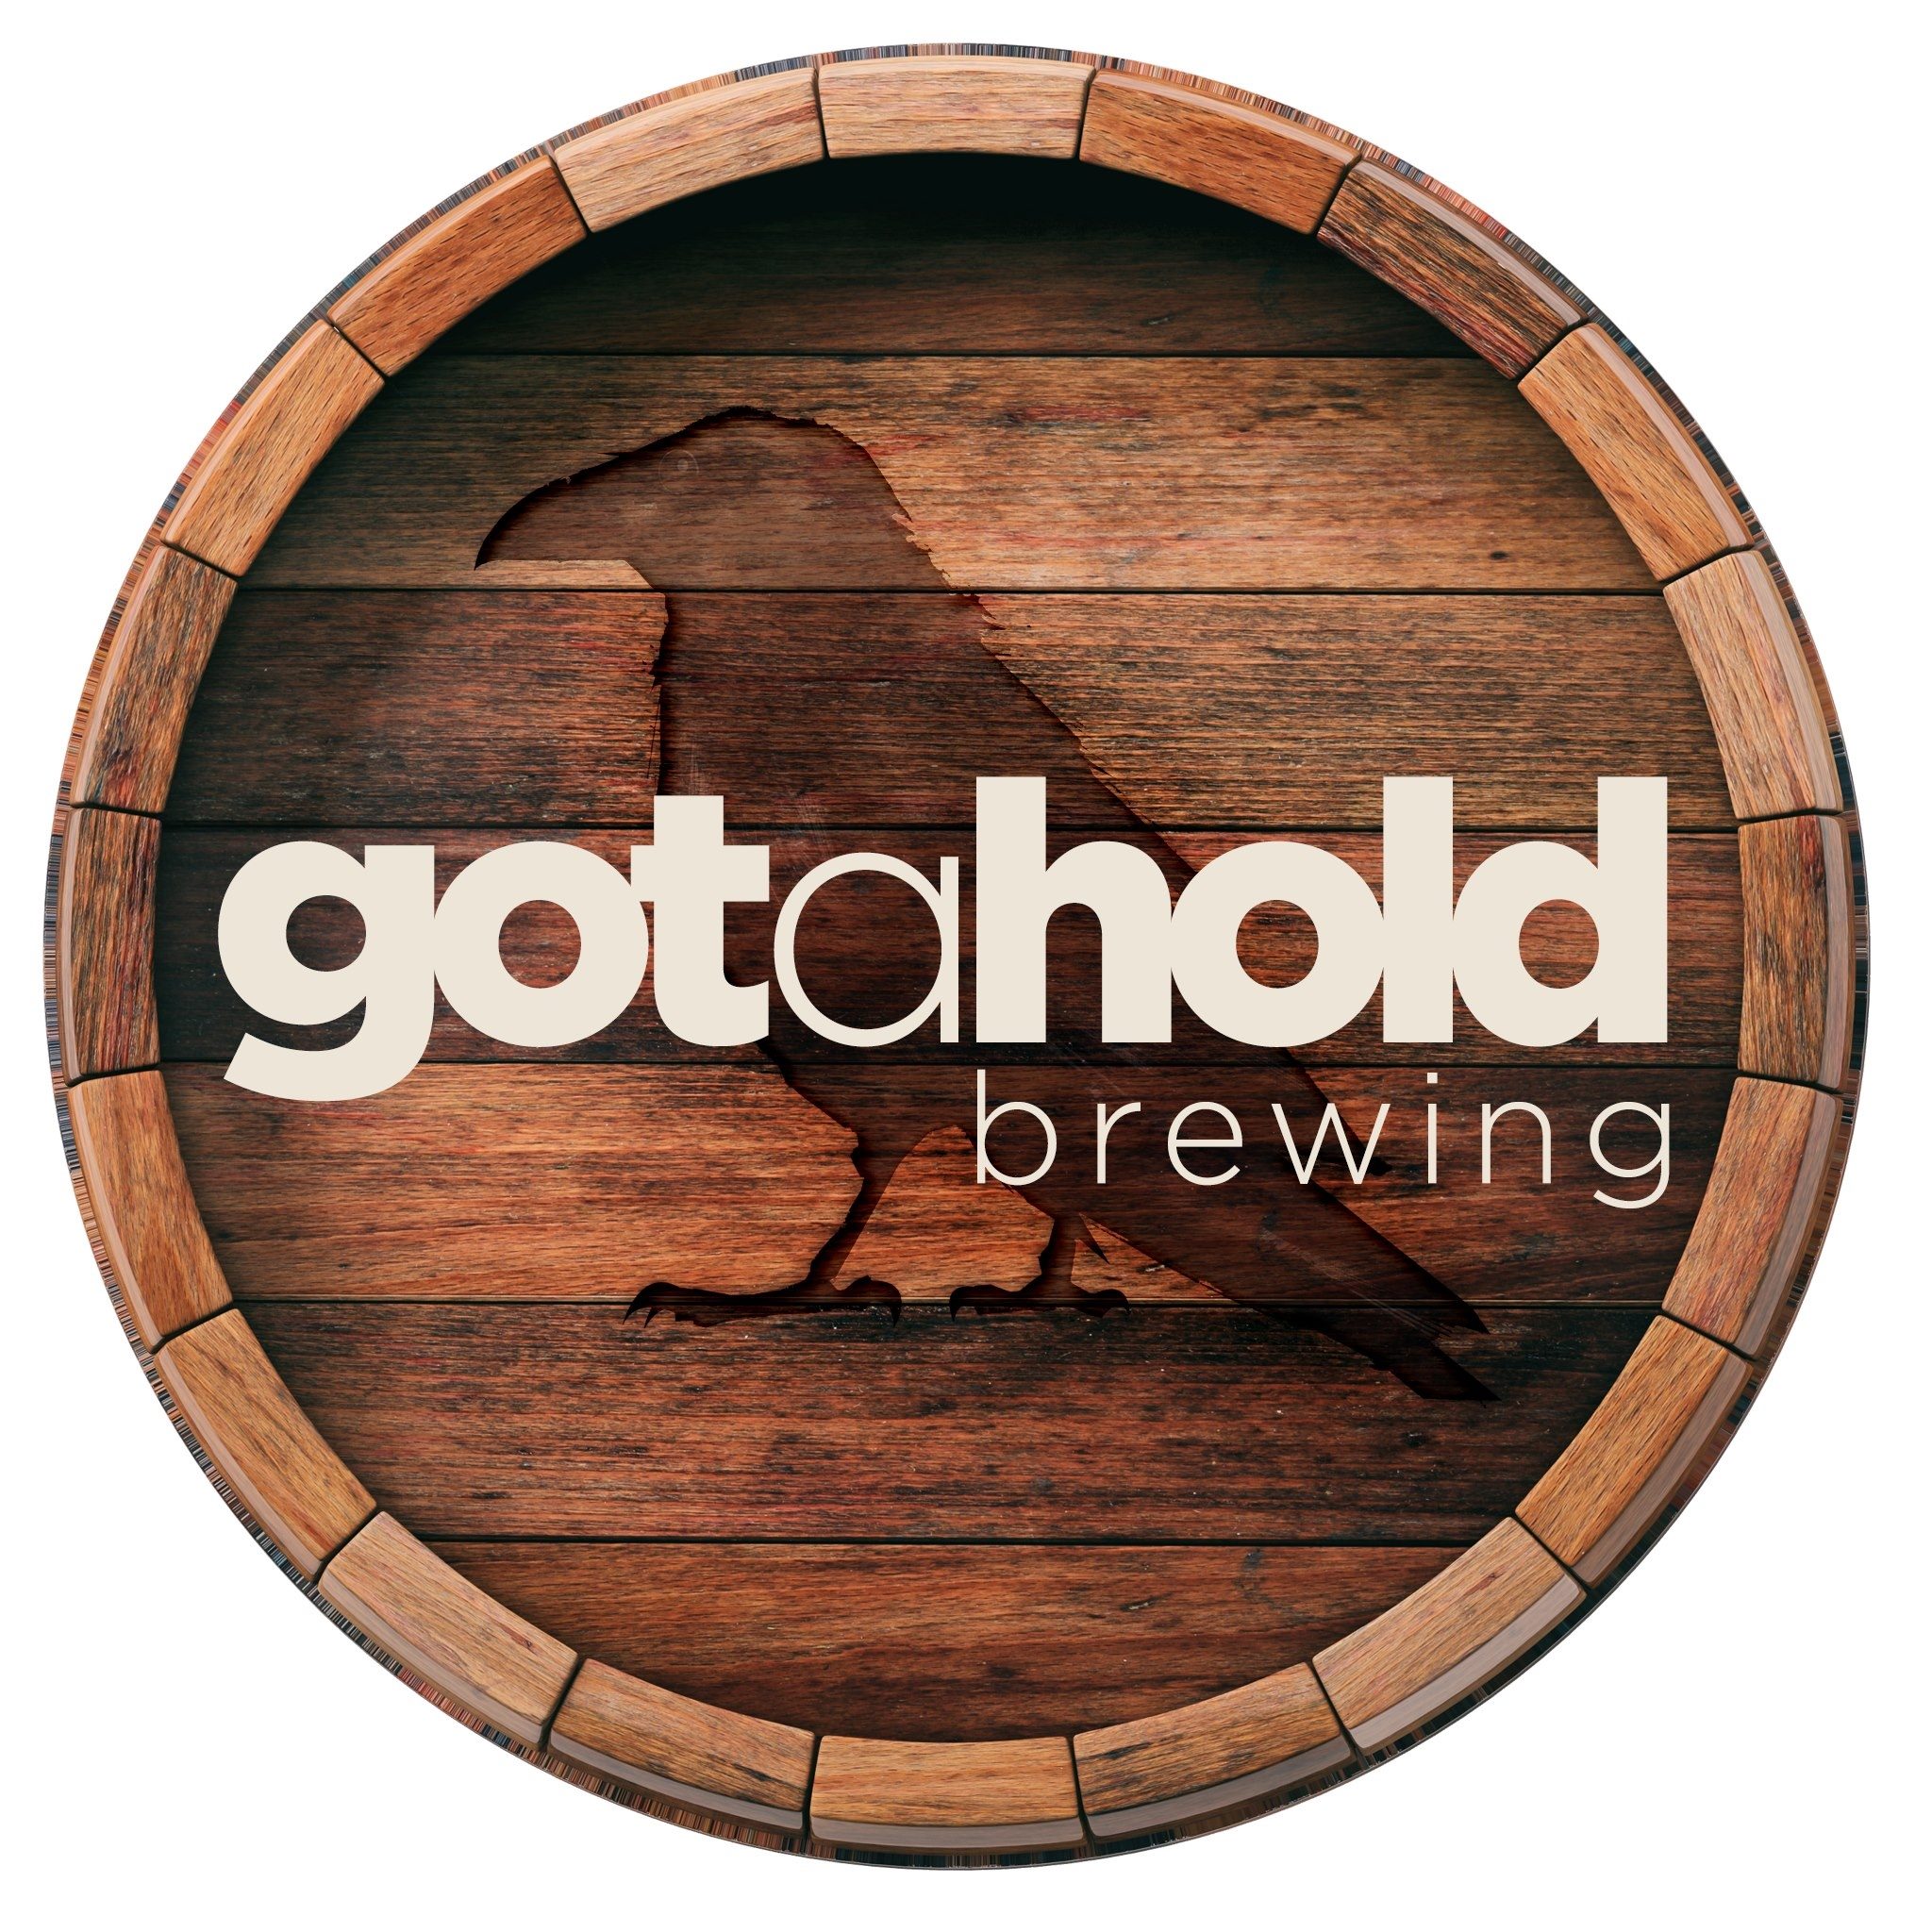 Gotahold Brewing